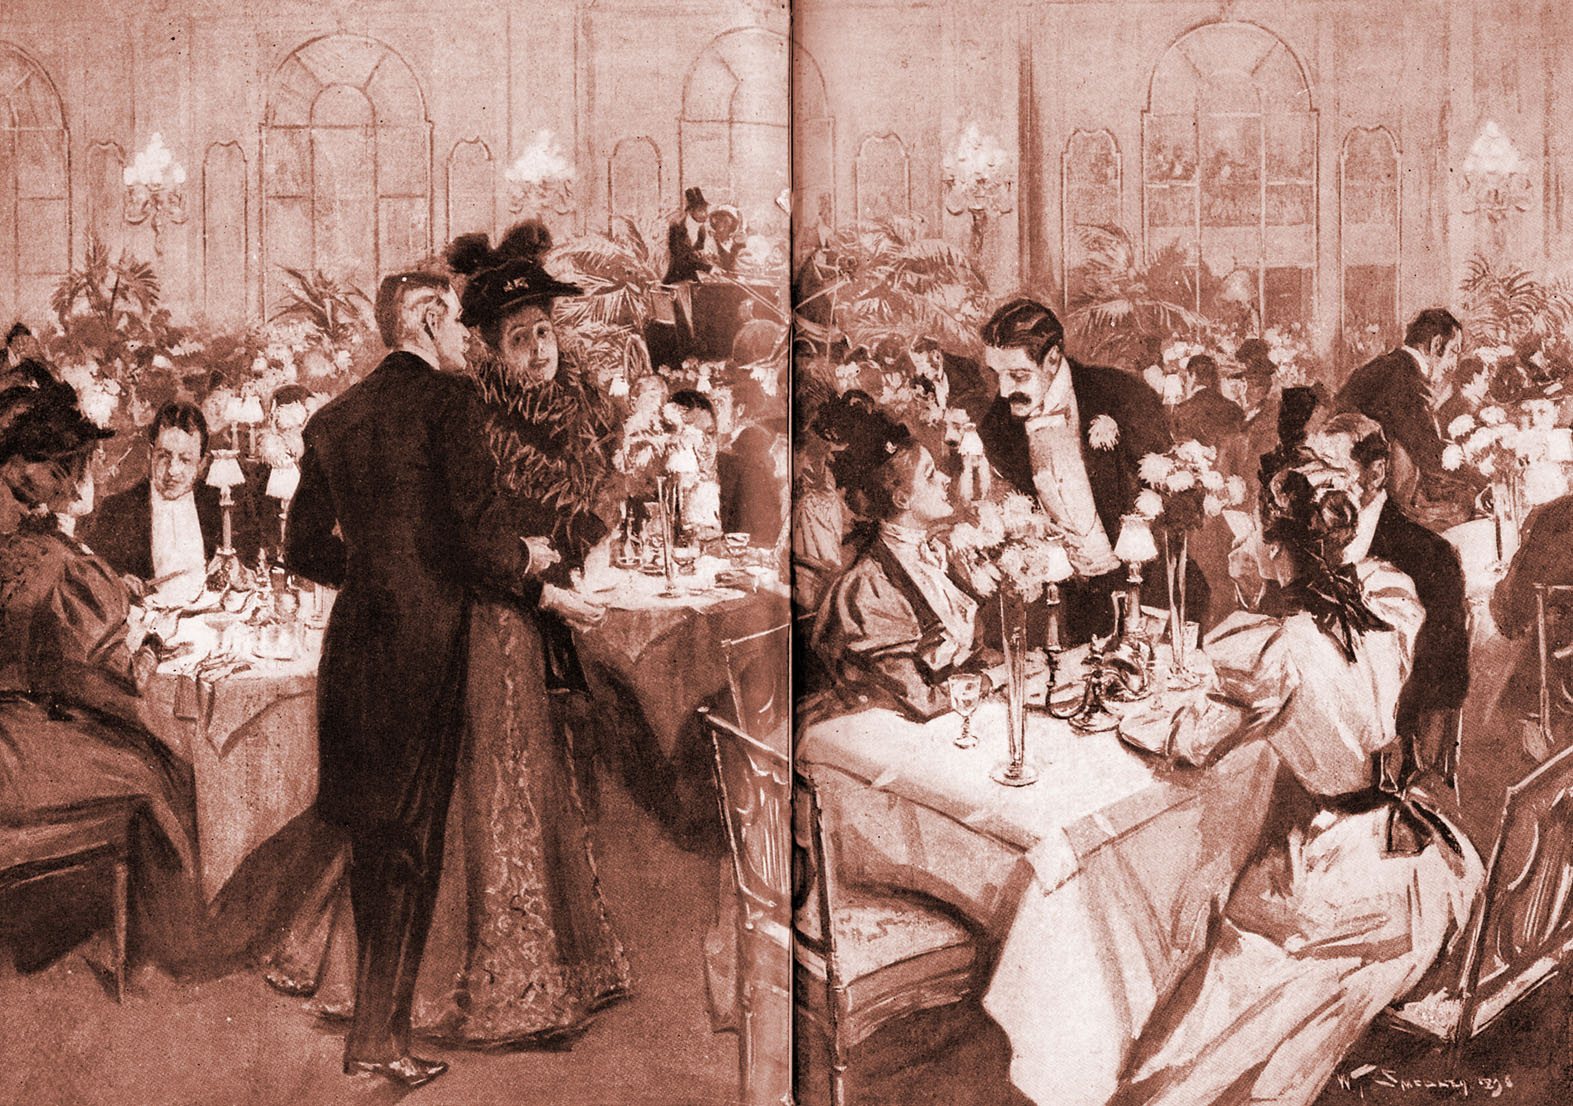 Members of high society at the Waldorf Hotel, 1896